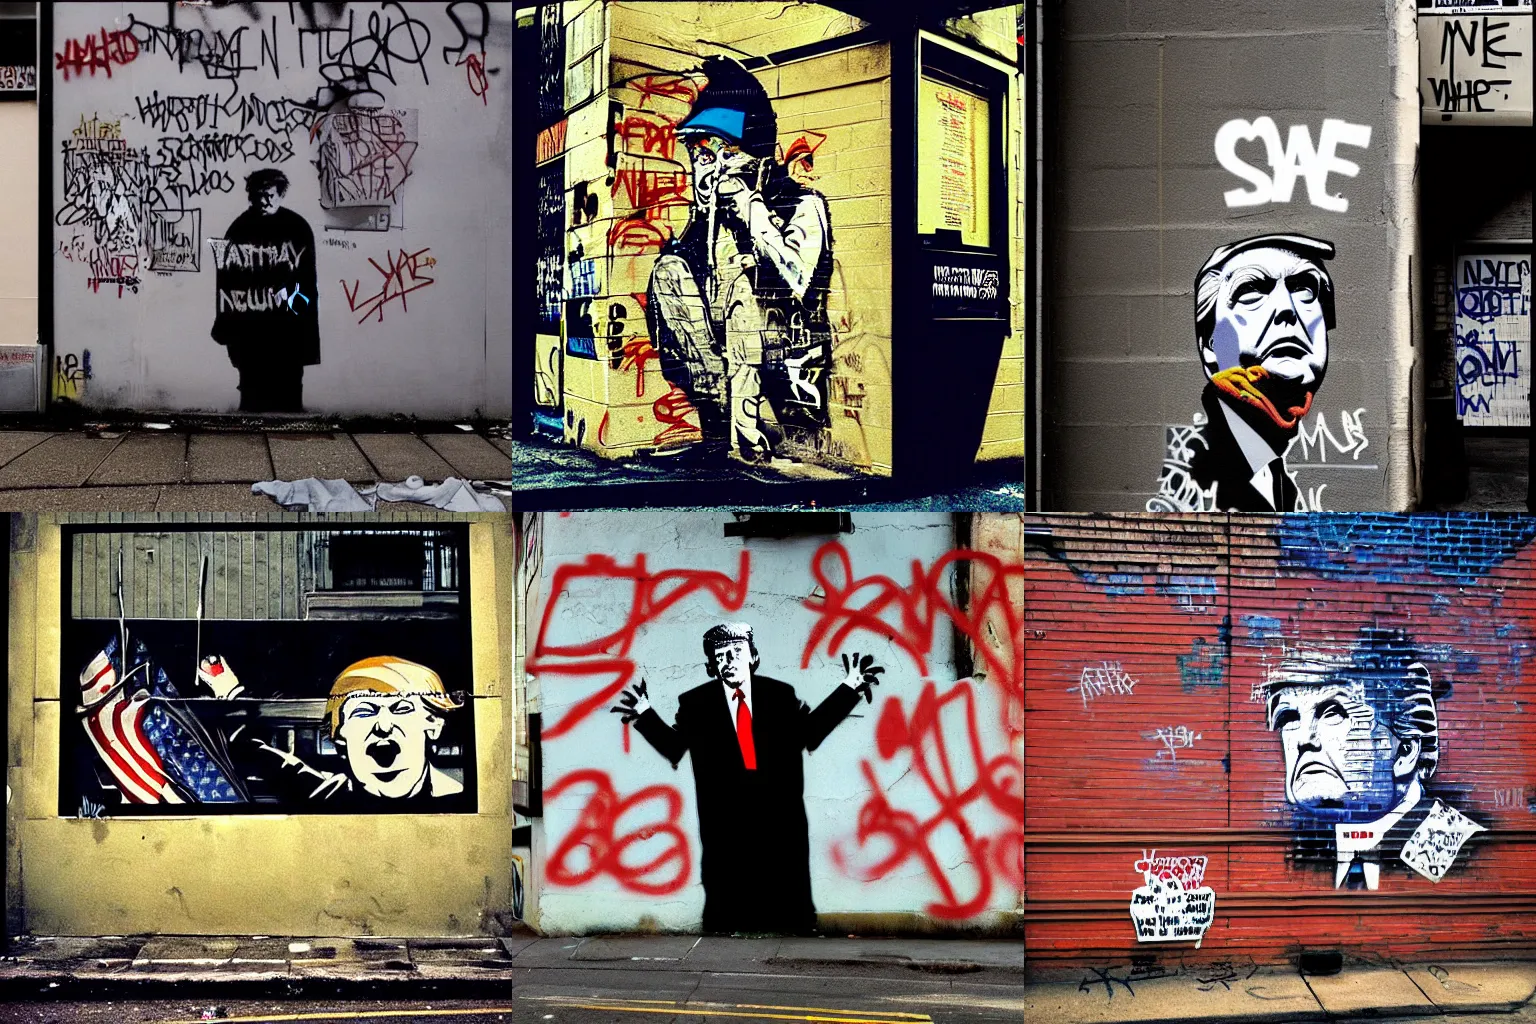 Prompt: Homeless Donald Trump Graffiti street art by banksy, mural, alleyway, holga style photograph,